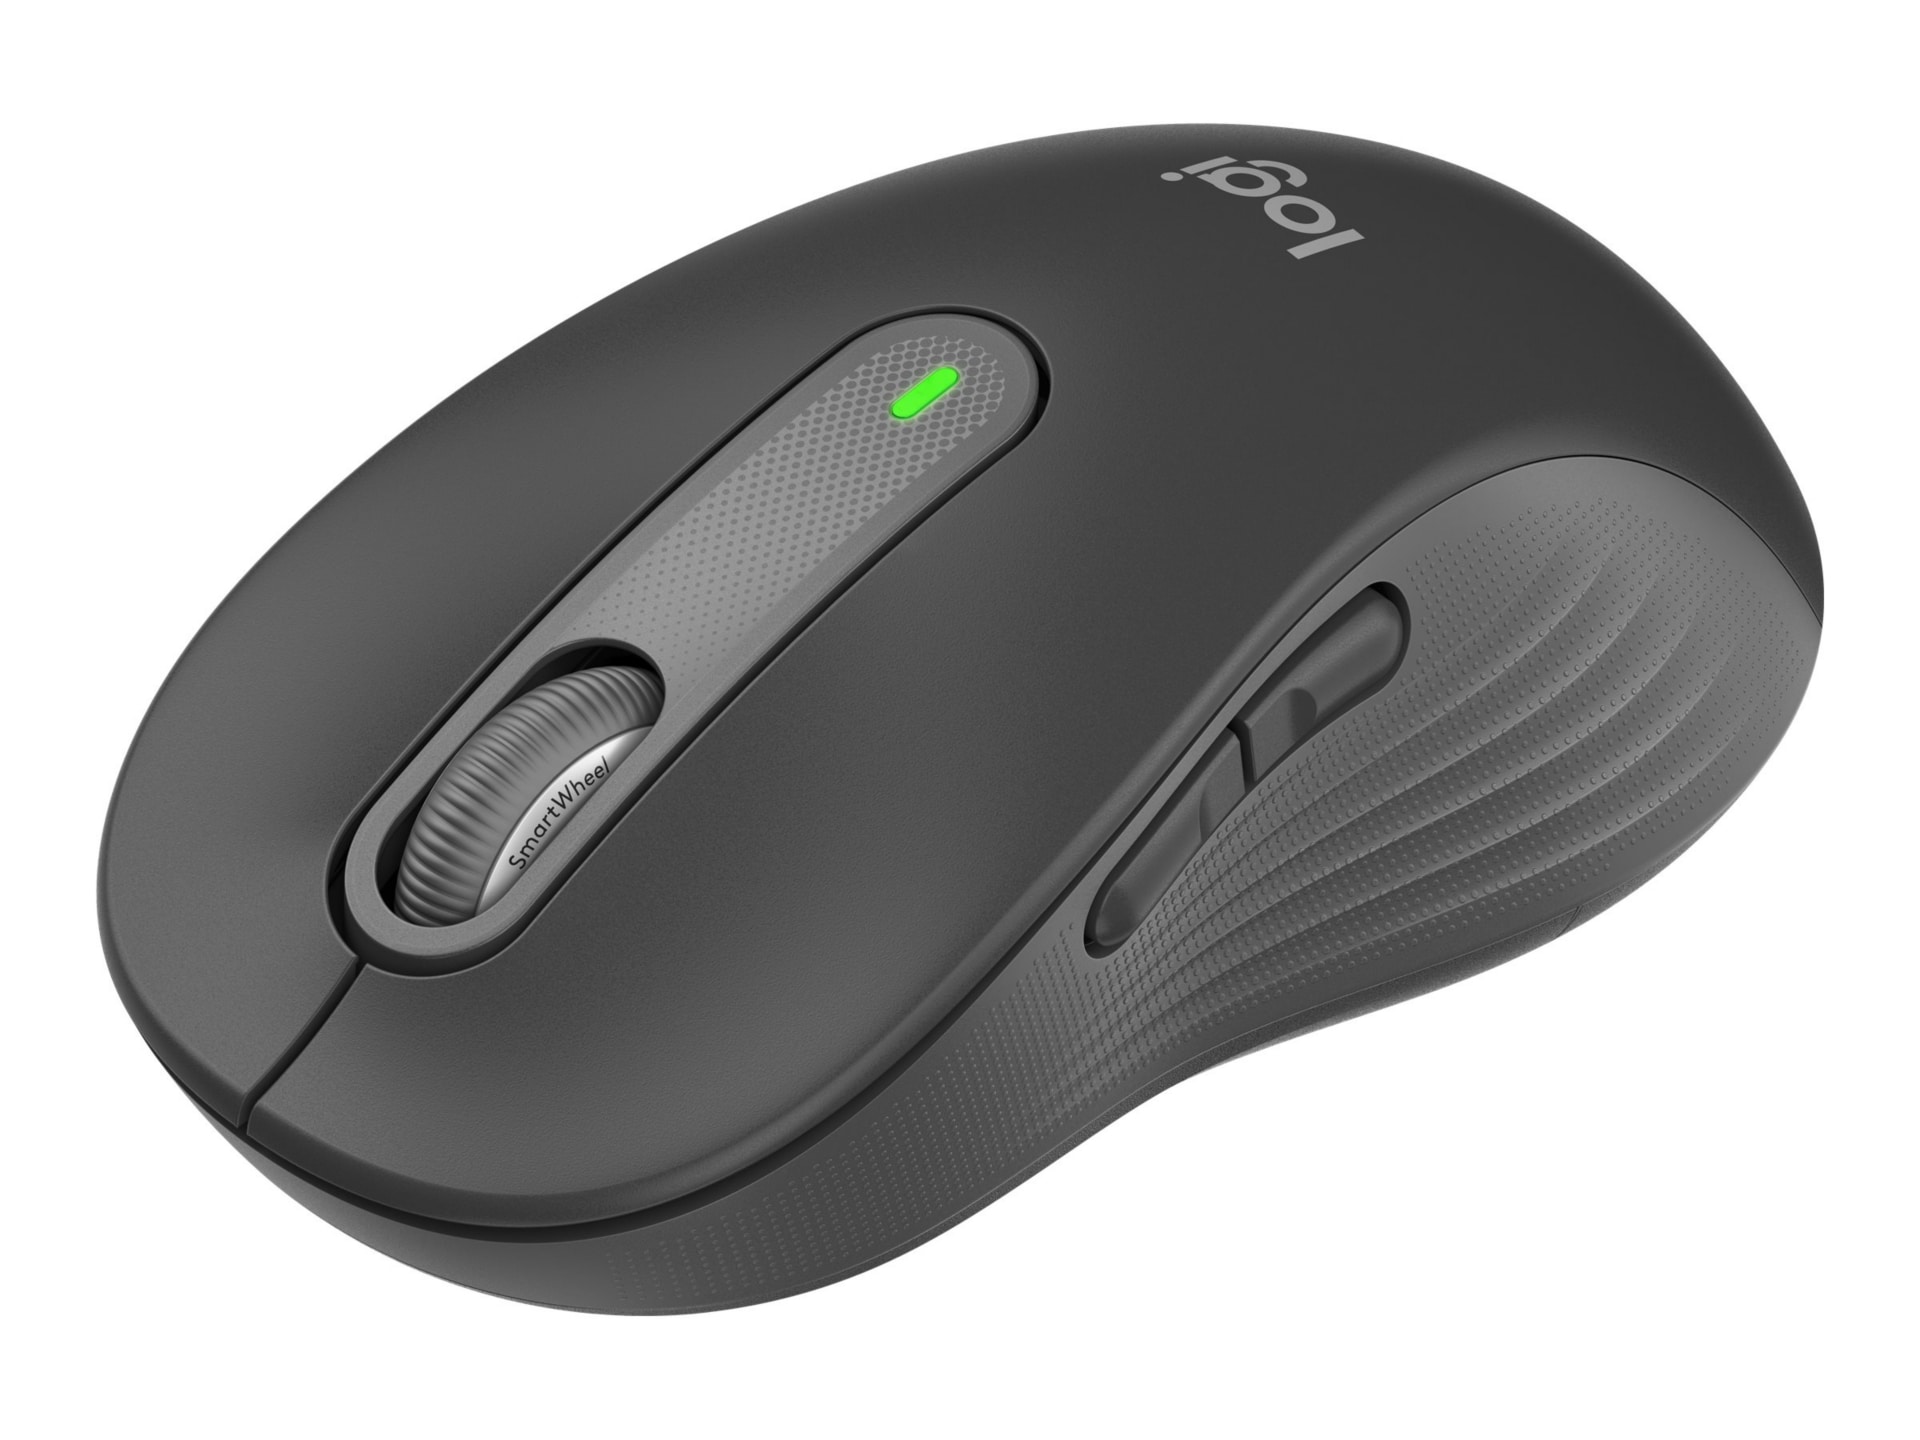 Logitech Signature M650 L for Business - mouse - large size - Bluetooth - g